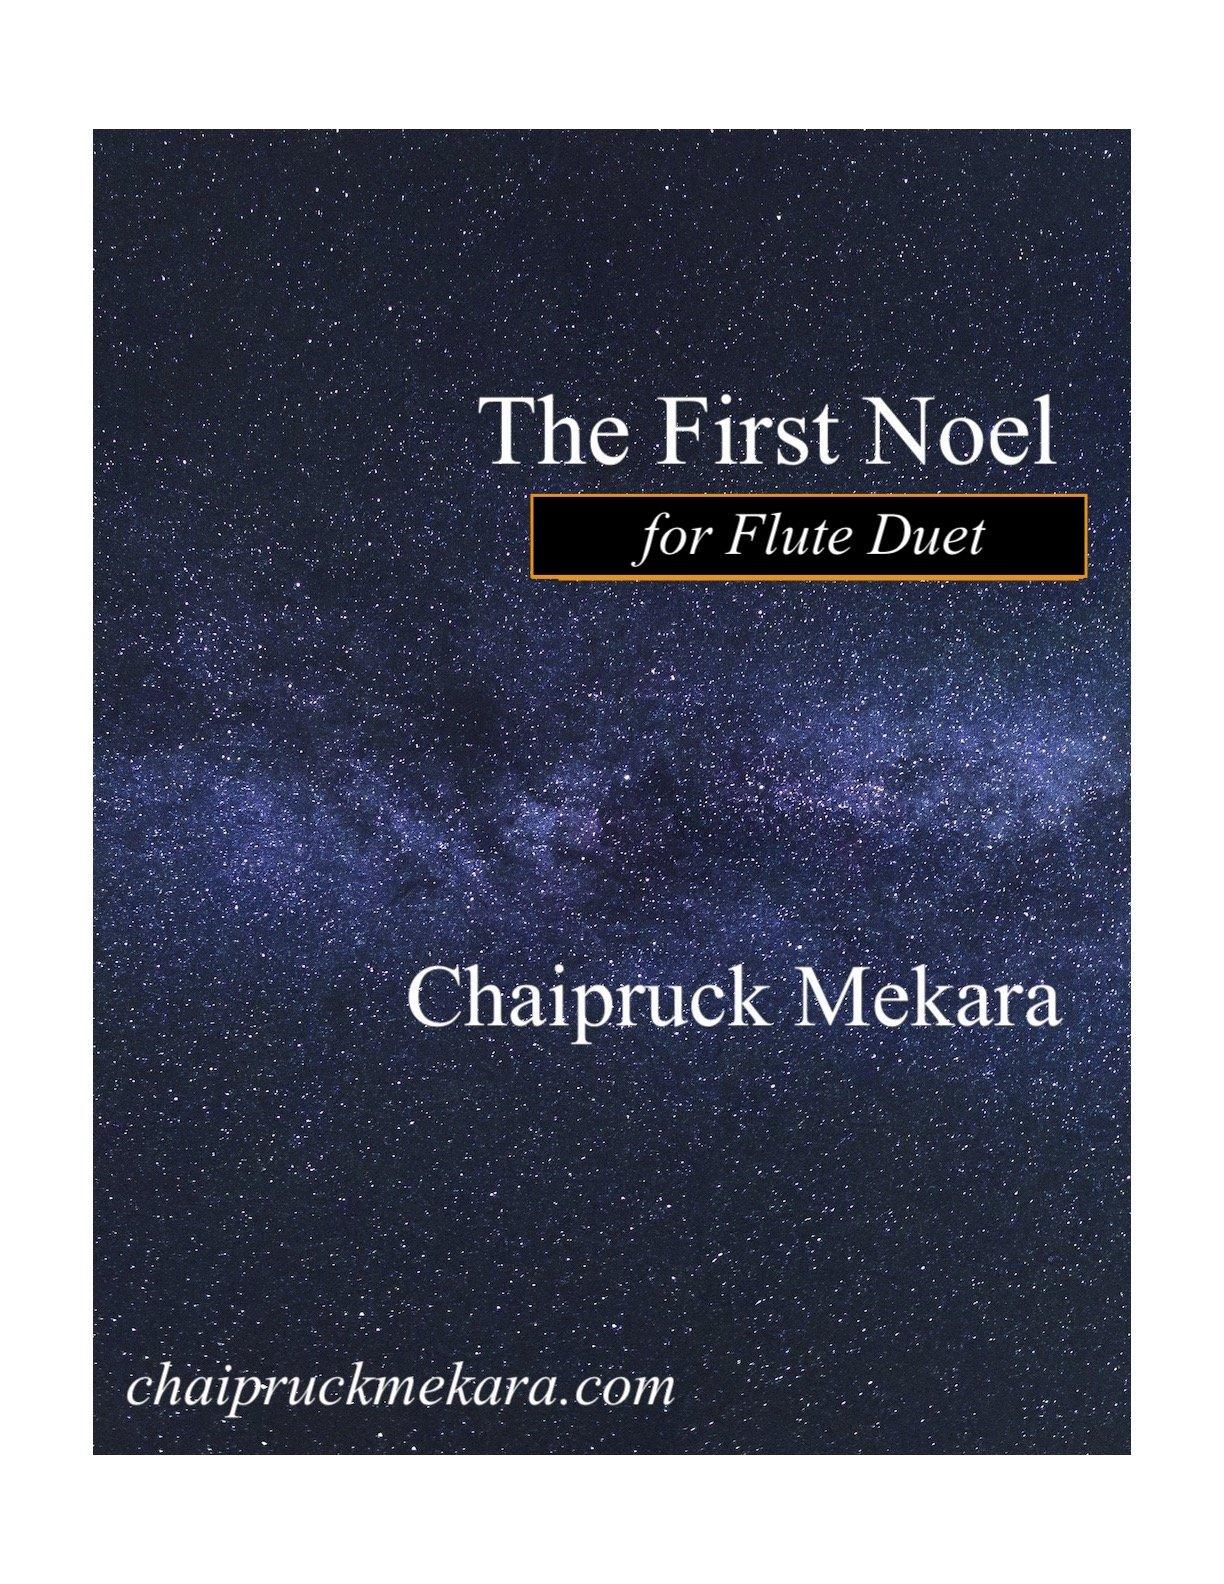 The First Noel for Flute Duet - ChaipruckMekara